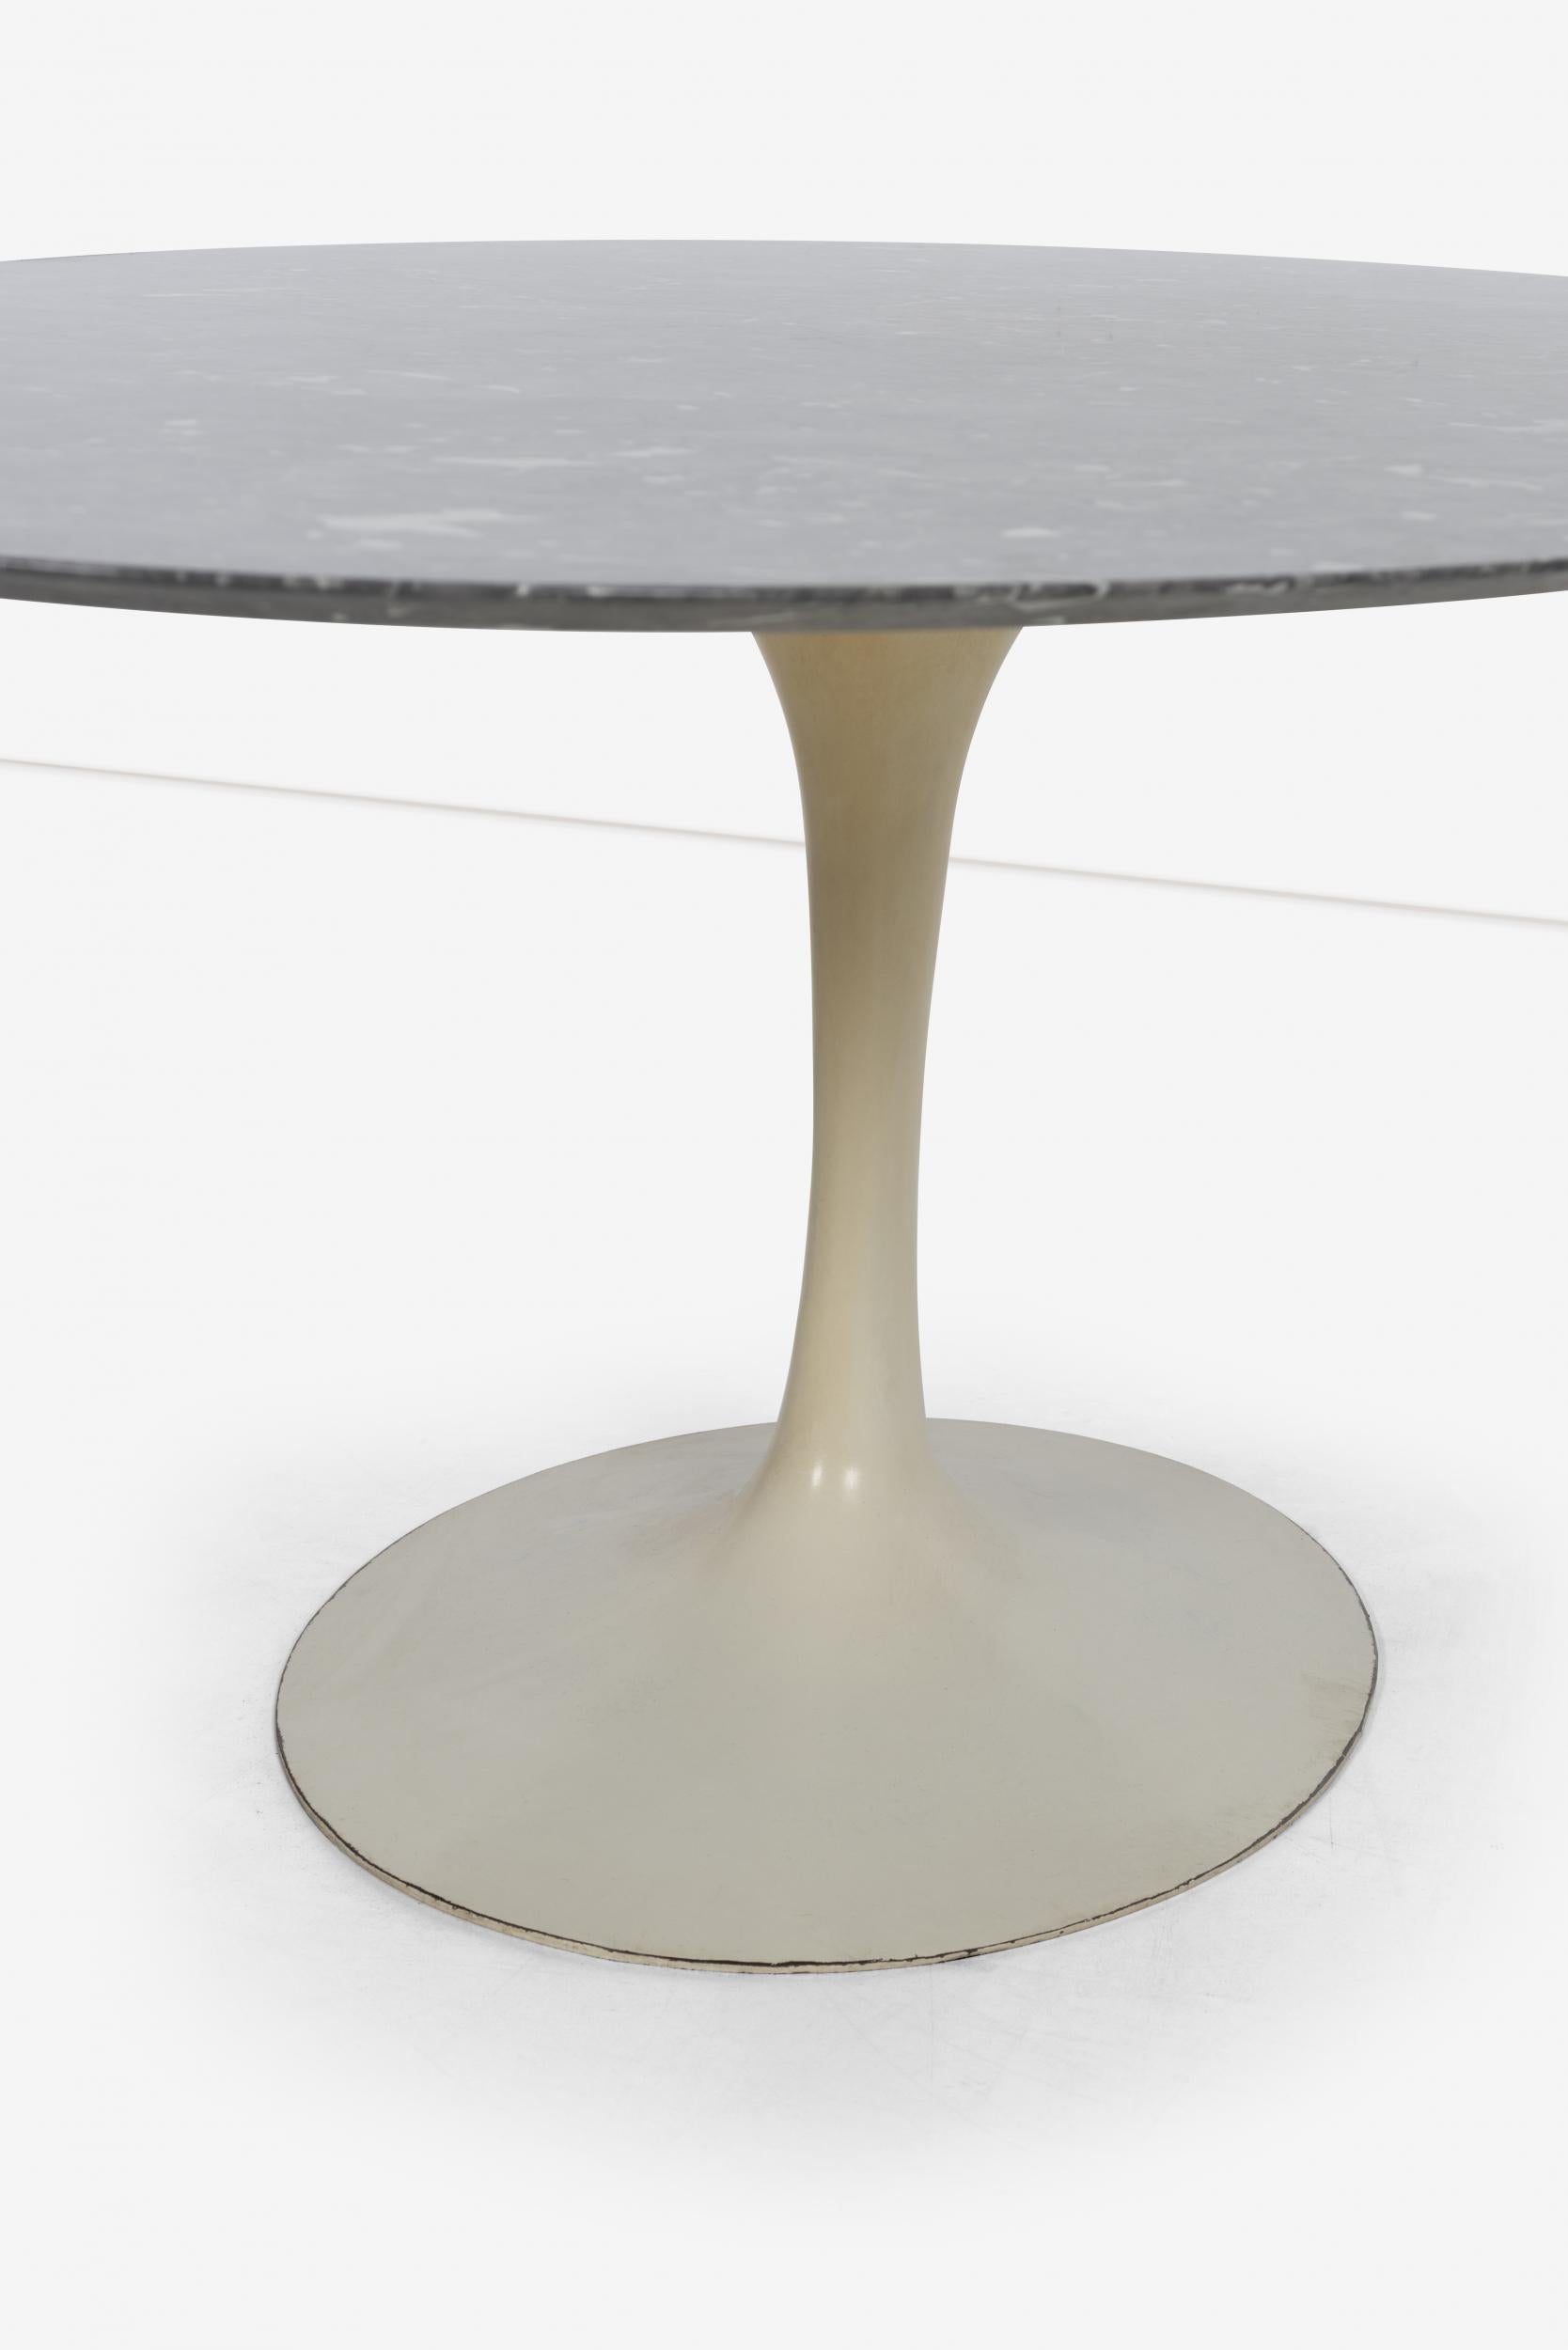 American Early Eero Saarinen for Knoll Tulip Table Cast Iron Base, Marble Top